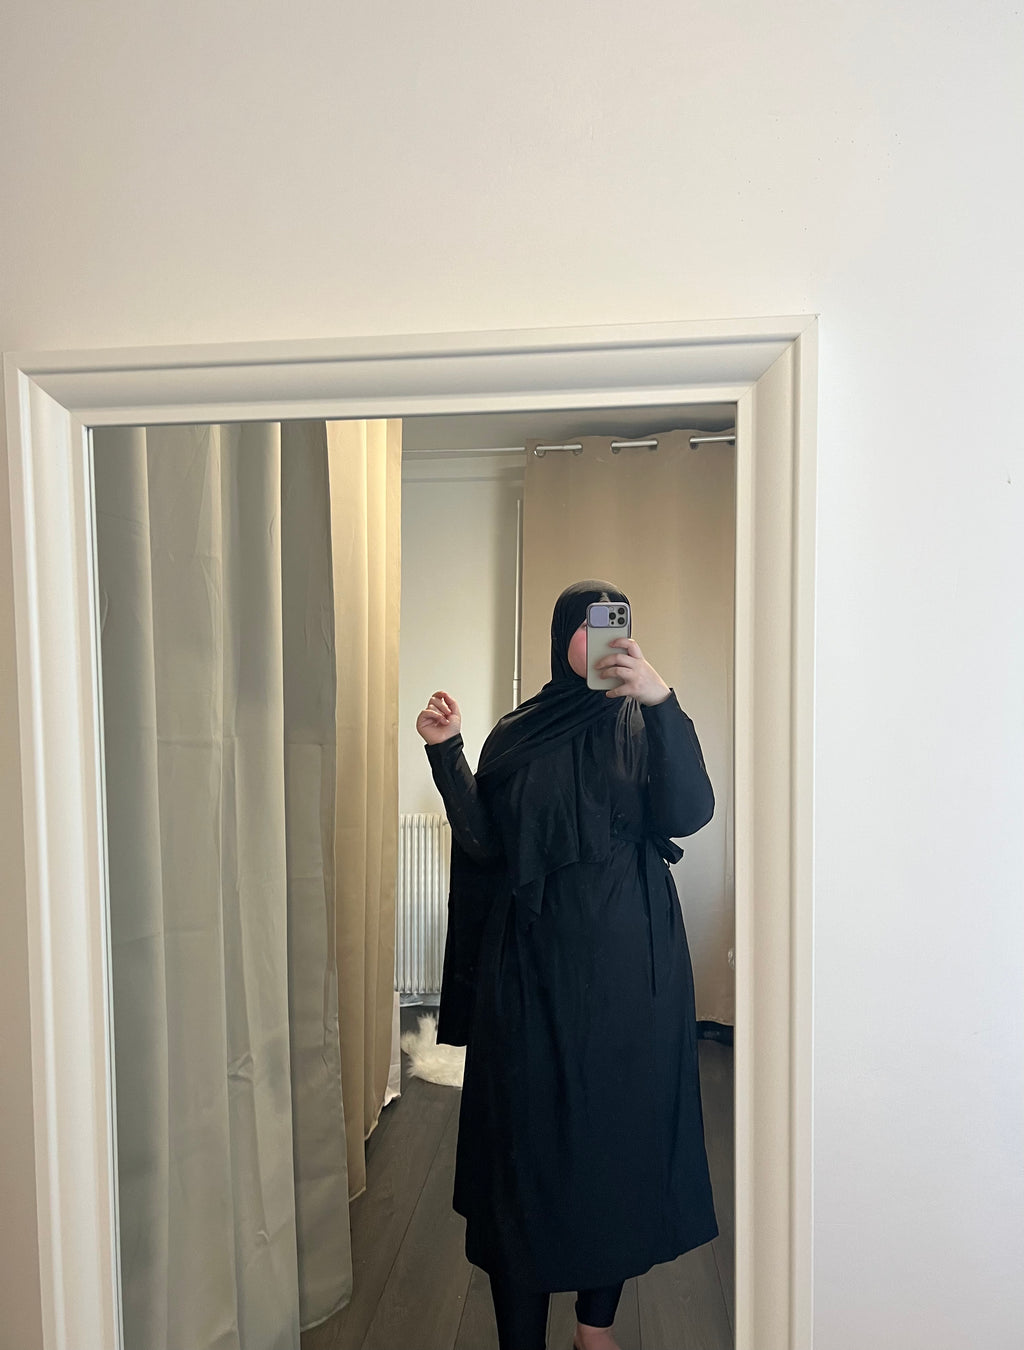 Burkini, Modest Swimwear Set,patterned Sleeves,3 Piece, Long Sleeve, Fully  Covered,modern Islamic Swimsuit,gift for Her,summer Dresses Women -   Canada